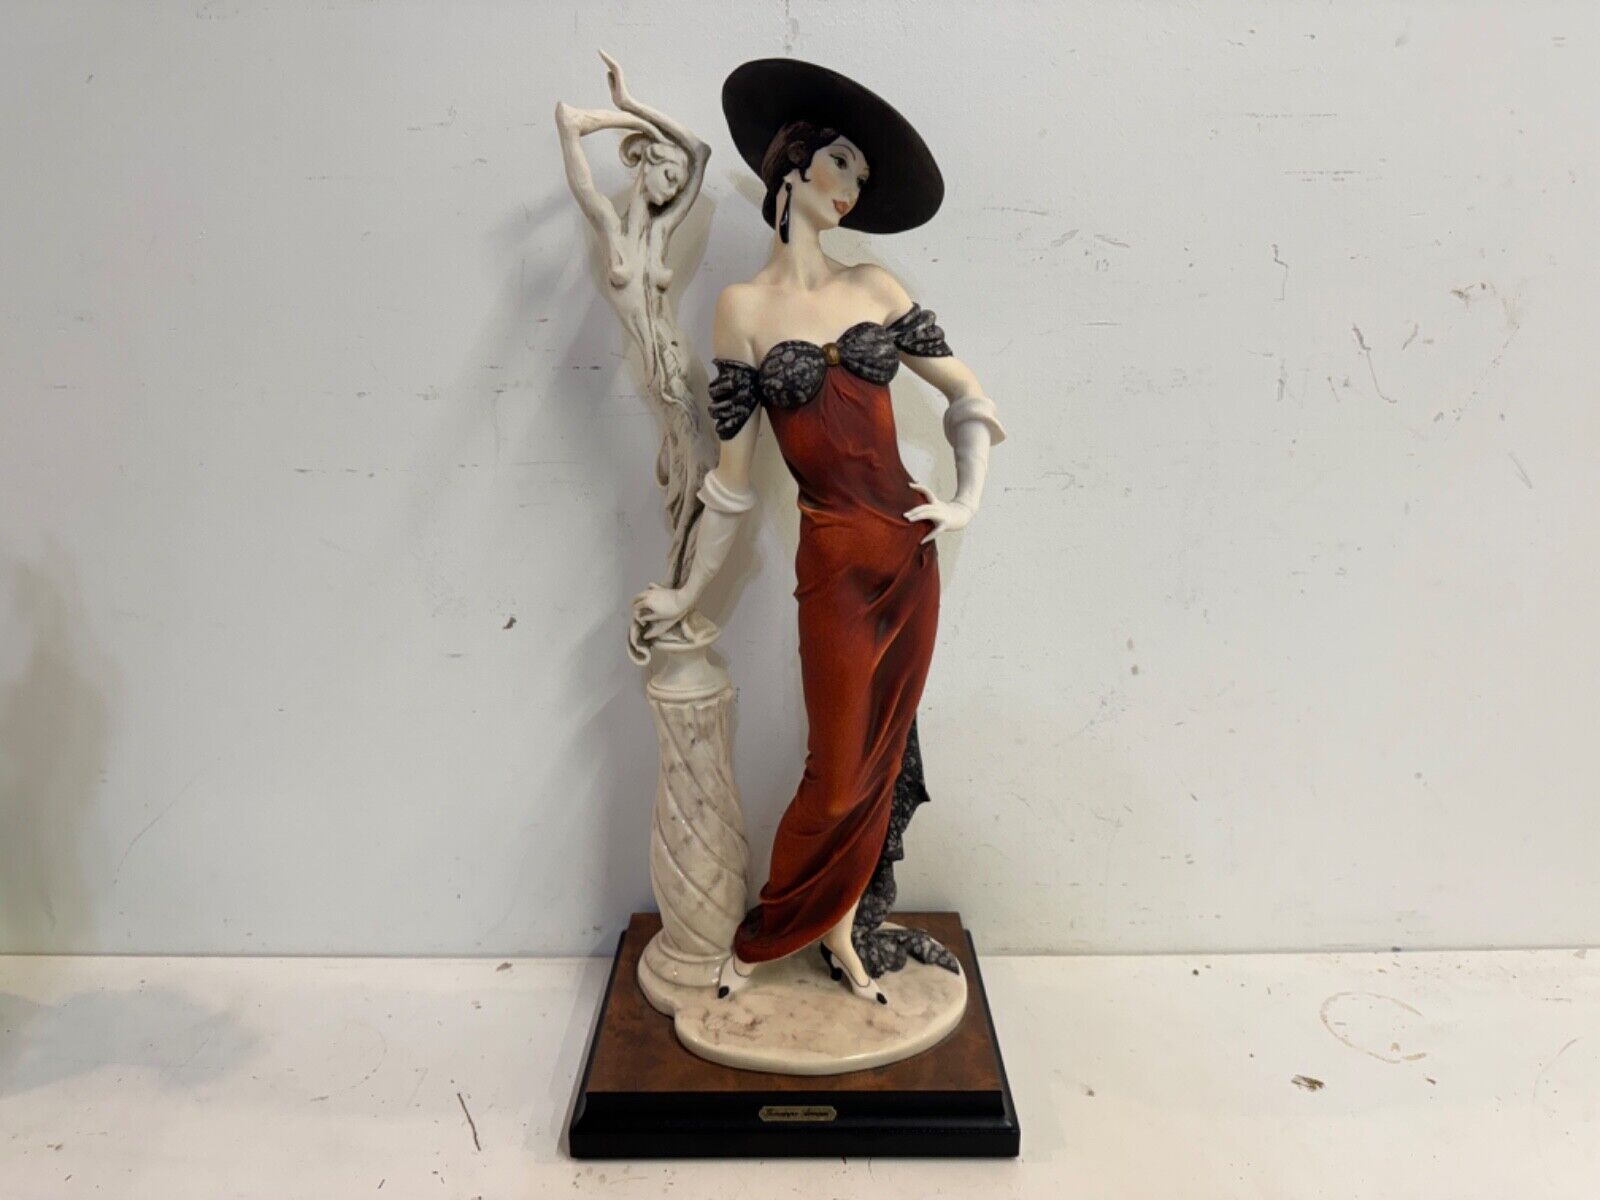 Vintage Giuseppe Armani “Fascination” Lady with Sculpture L.E. 1544/5000 192C